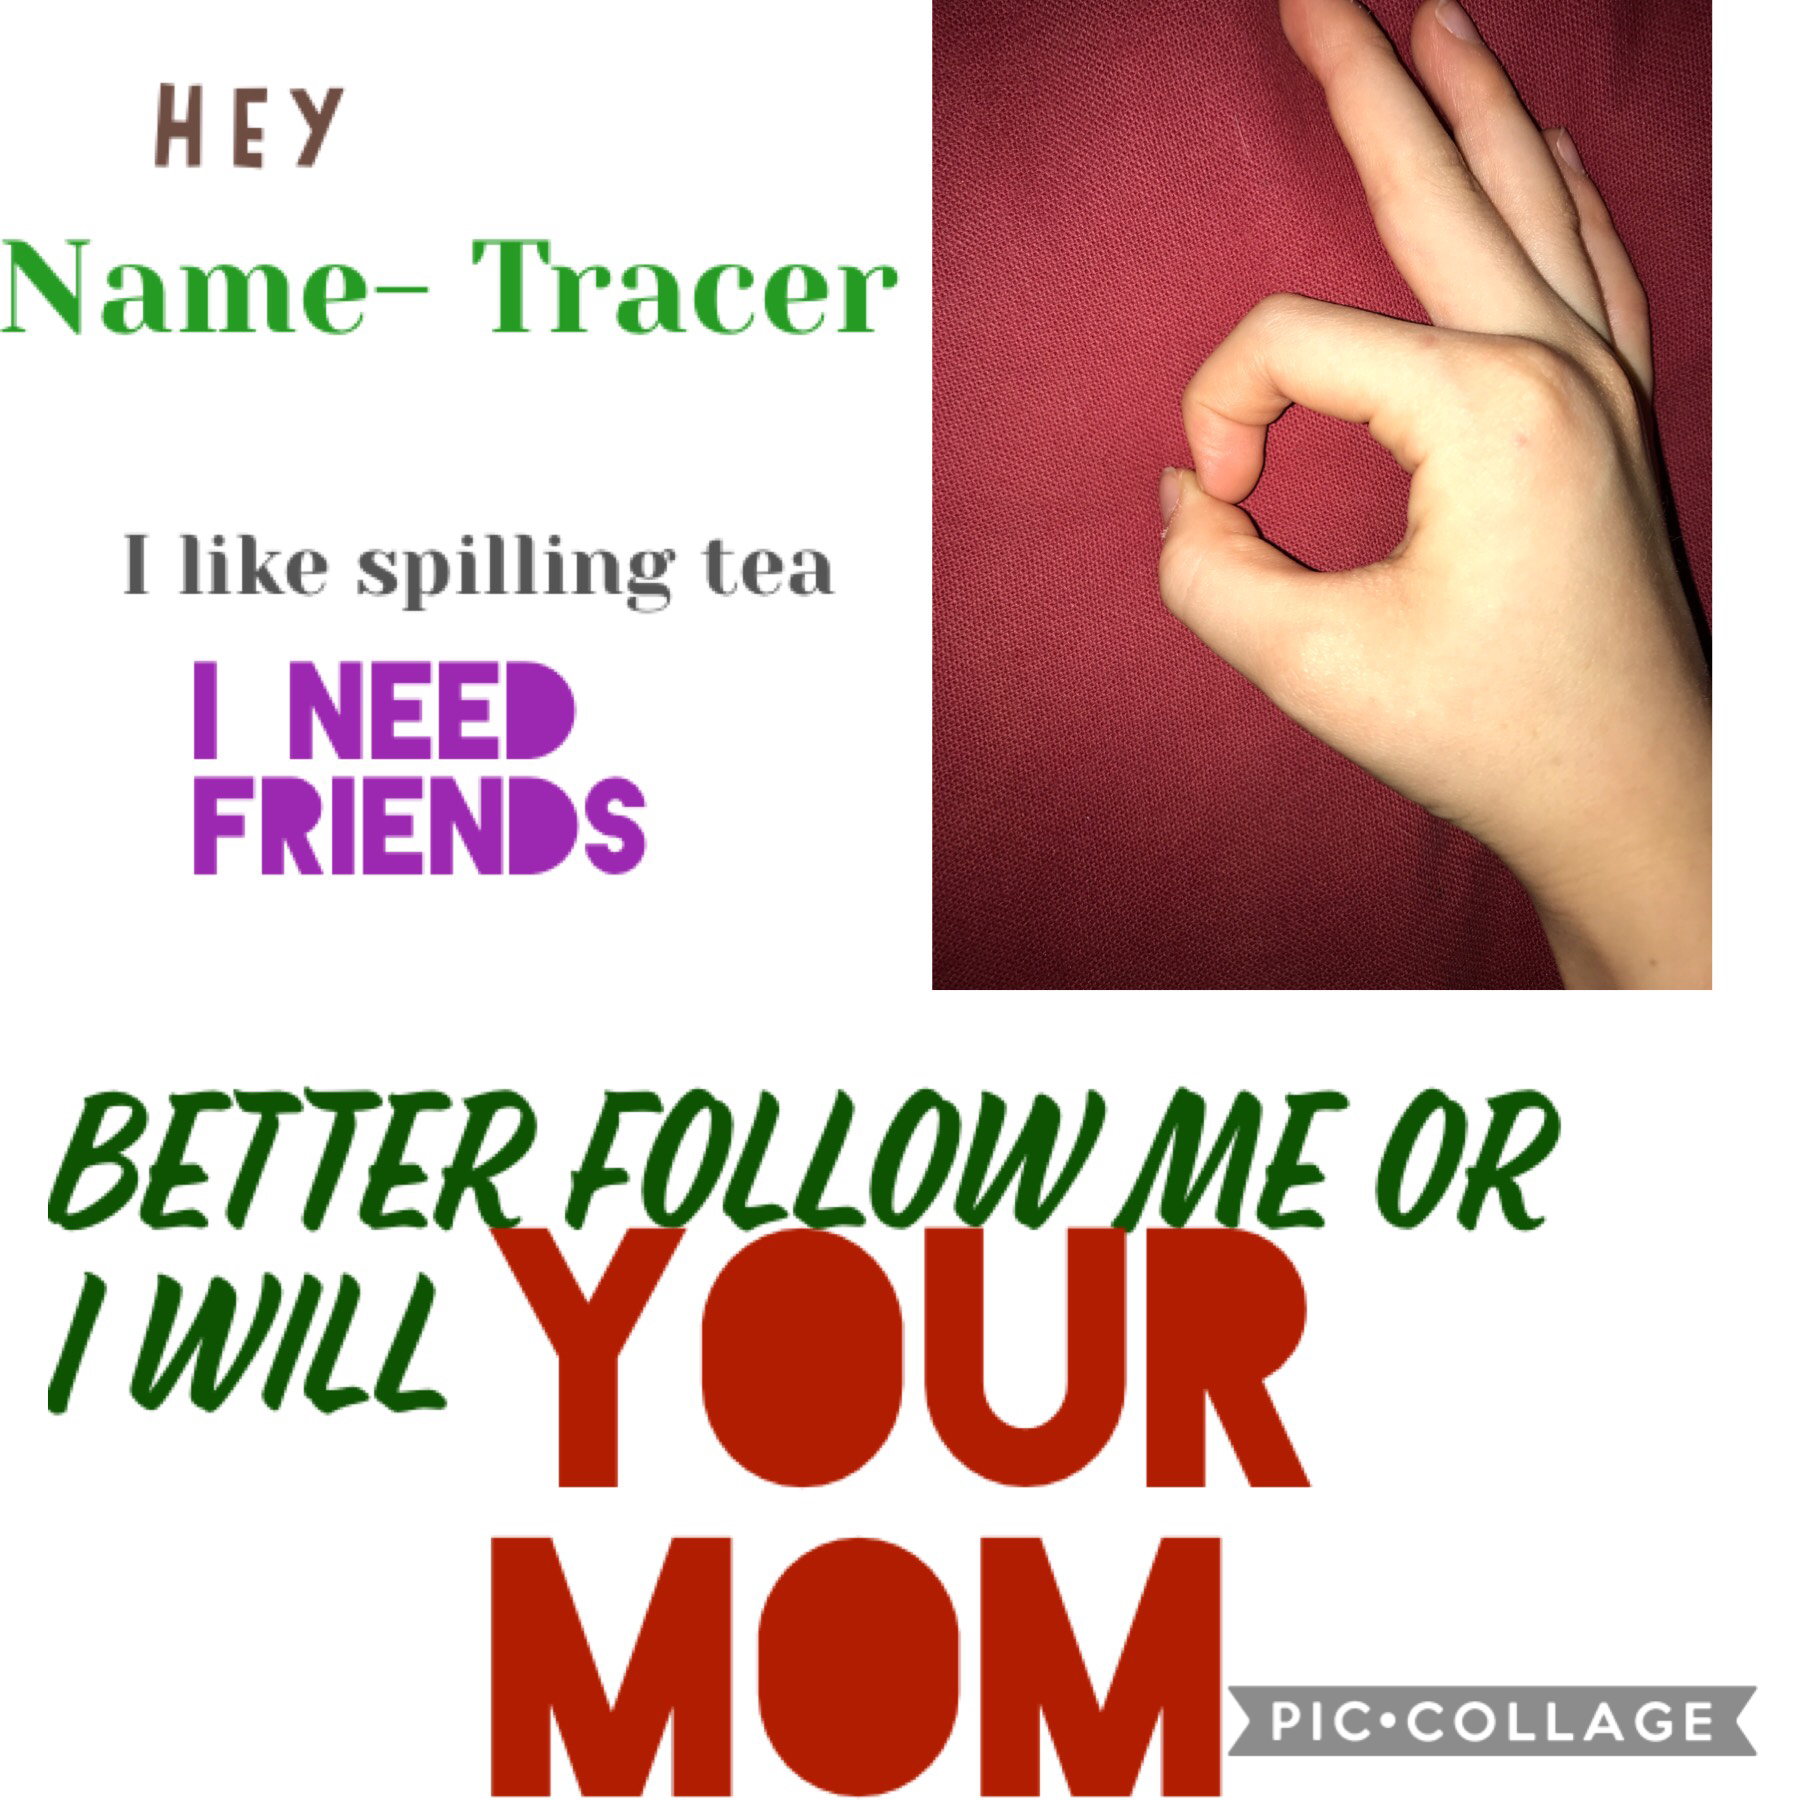   tap or else I’ll your mom
I’m a meme generator 
Oof tea is spilled 
I’m already tracer 